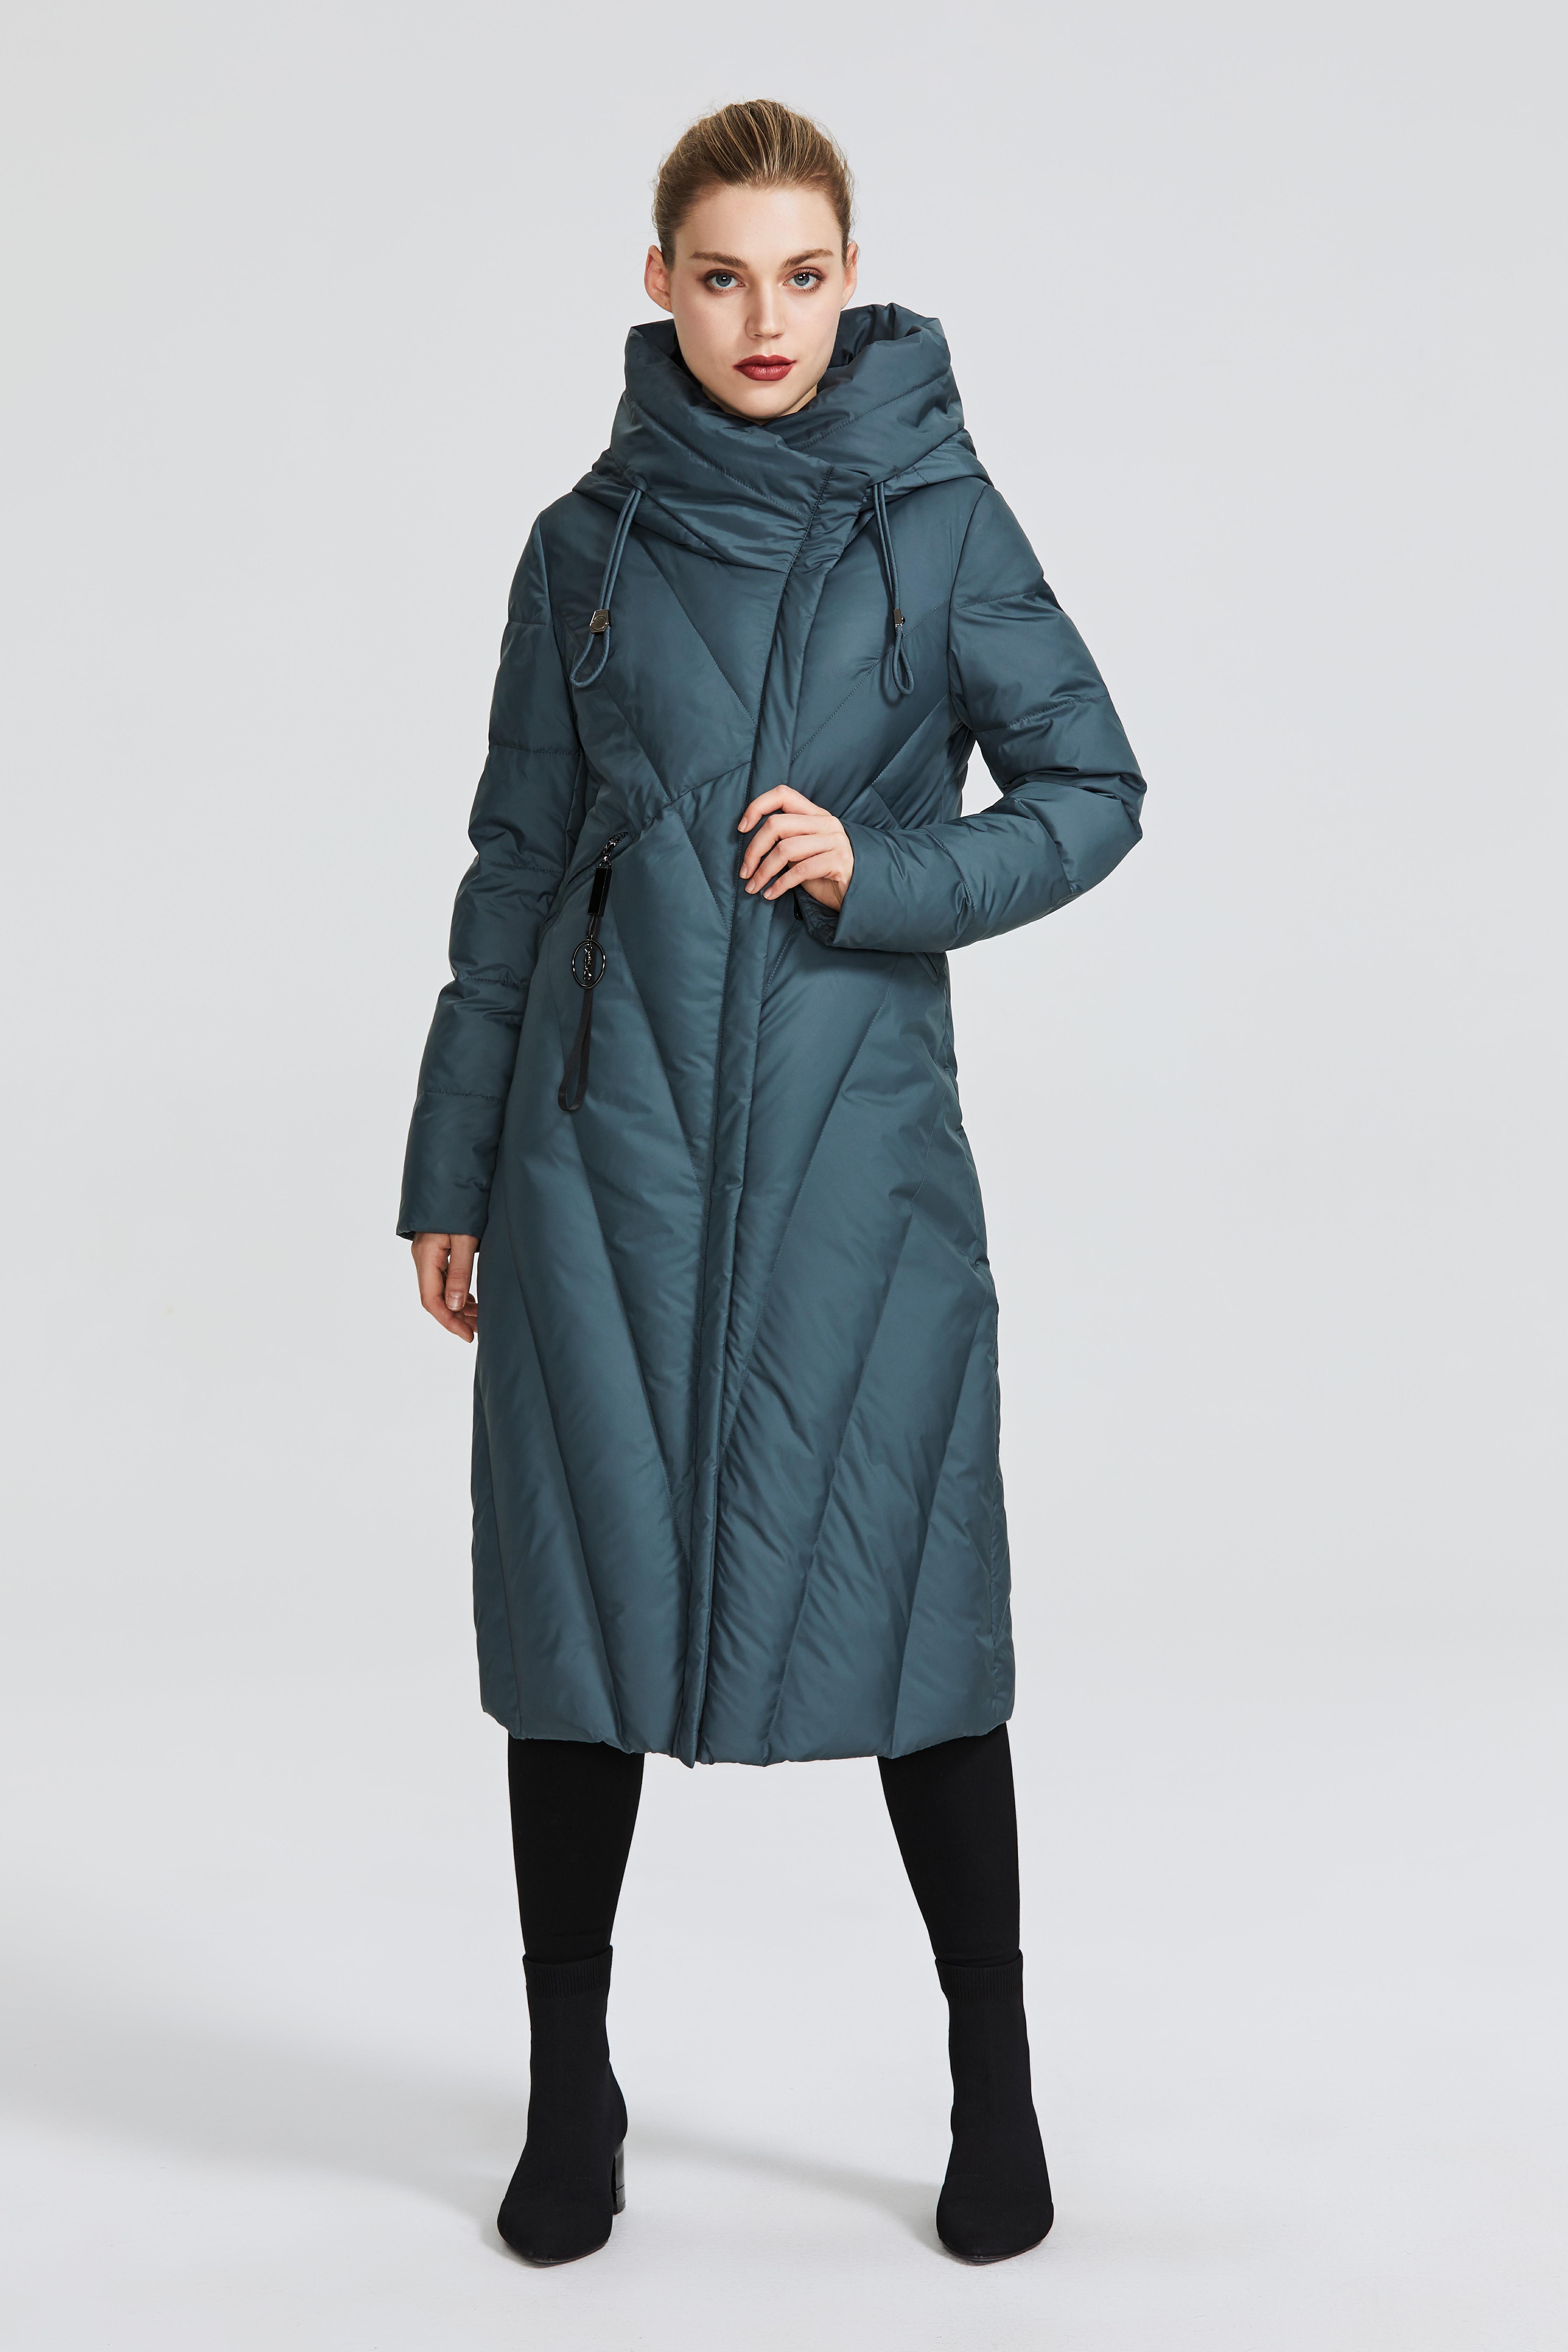 MIEGOFCED99266新しいコレクションの女性用コートに耐性のある防風カラーの女性パーカー